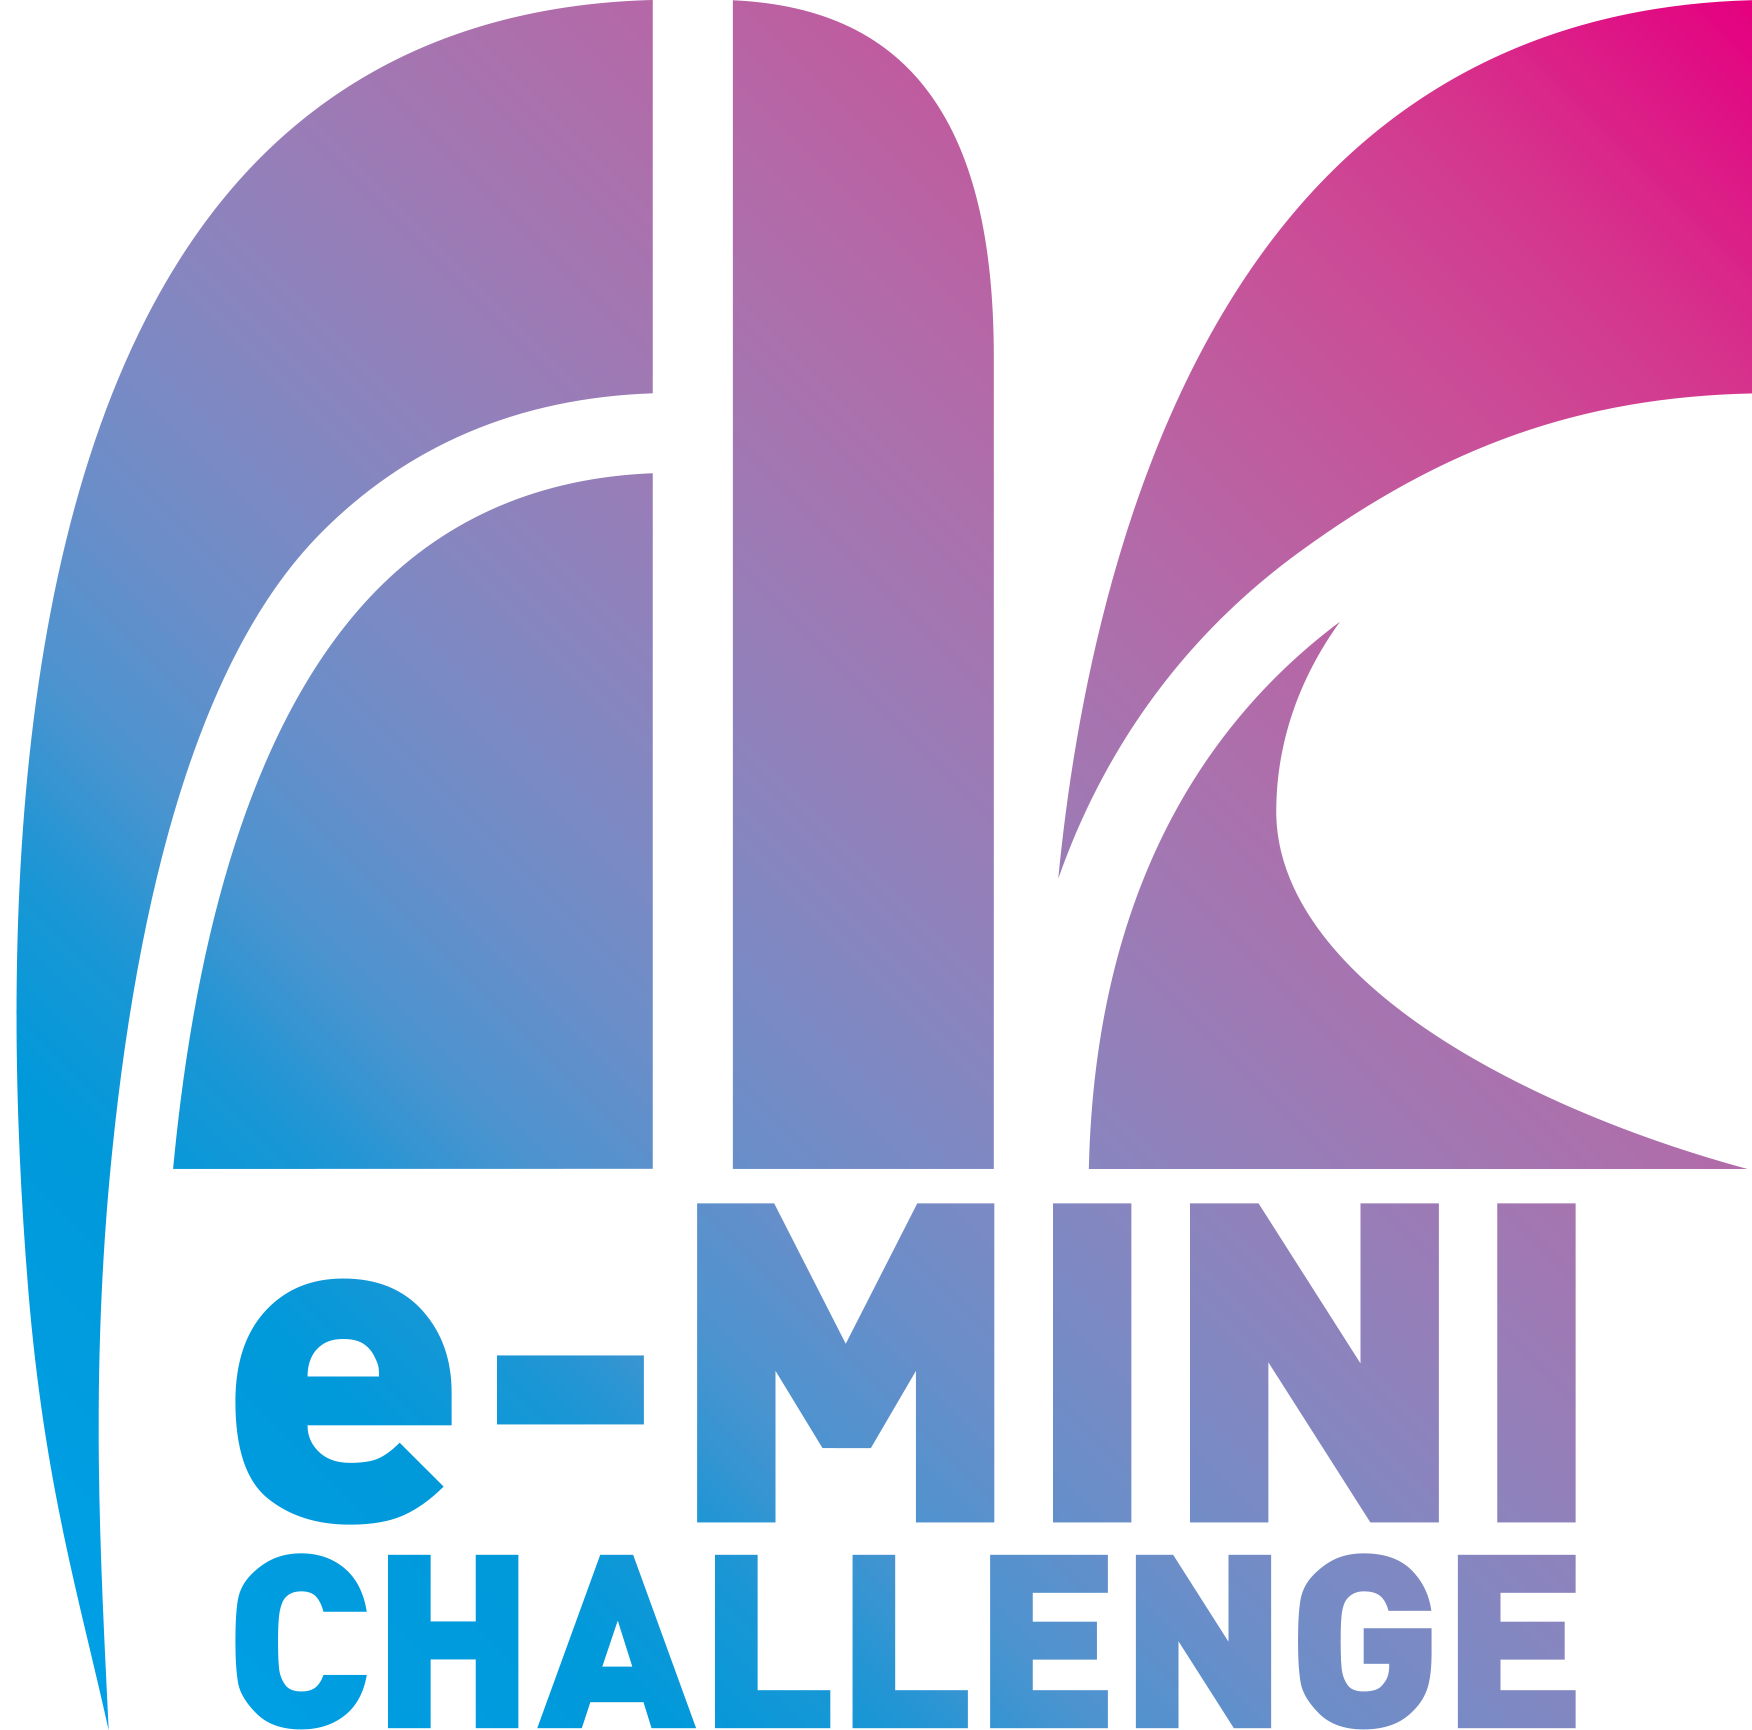 e-MINI CHALLENGE®2022 S1 Rd.4 A/B ポイントランキング公開